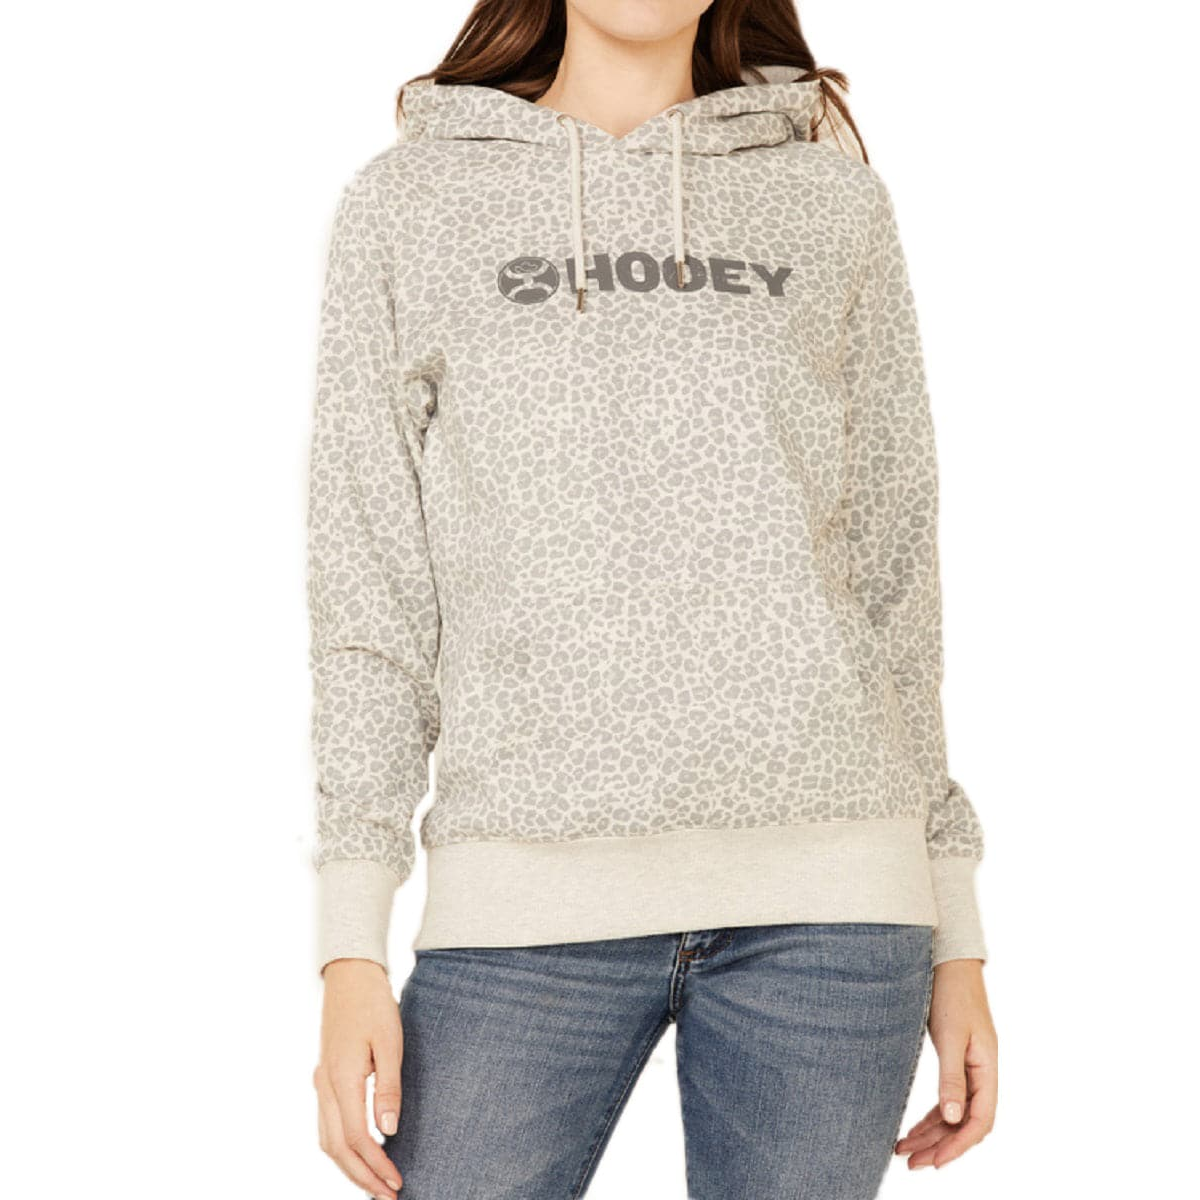 Hooey Girl's Snow Leopard Heather Grey Hooded Sweatshirt HH1169GY-Y